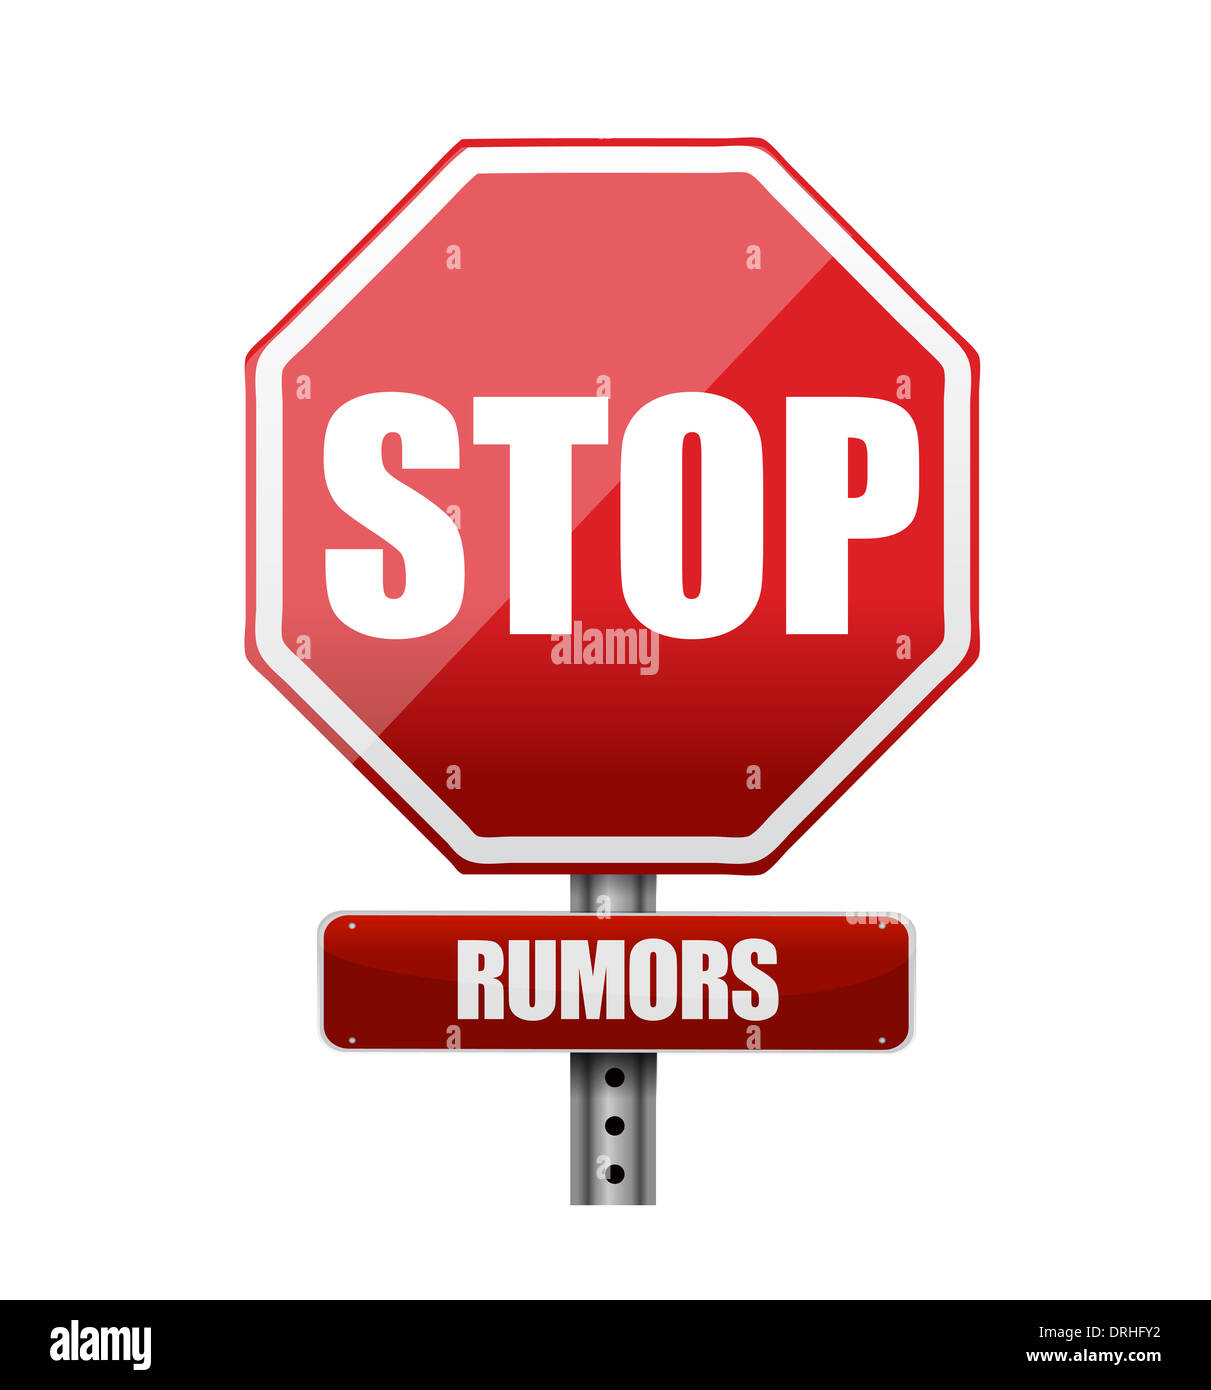 stop rumors road sign illustration design over white Stock Photo